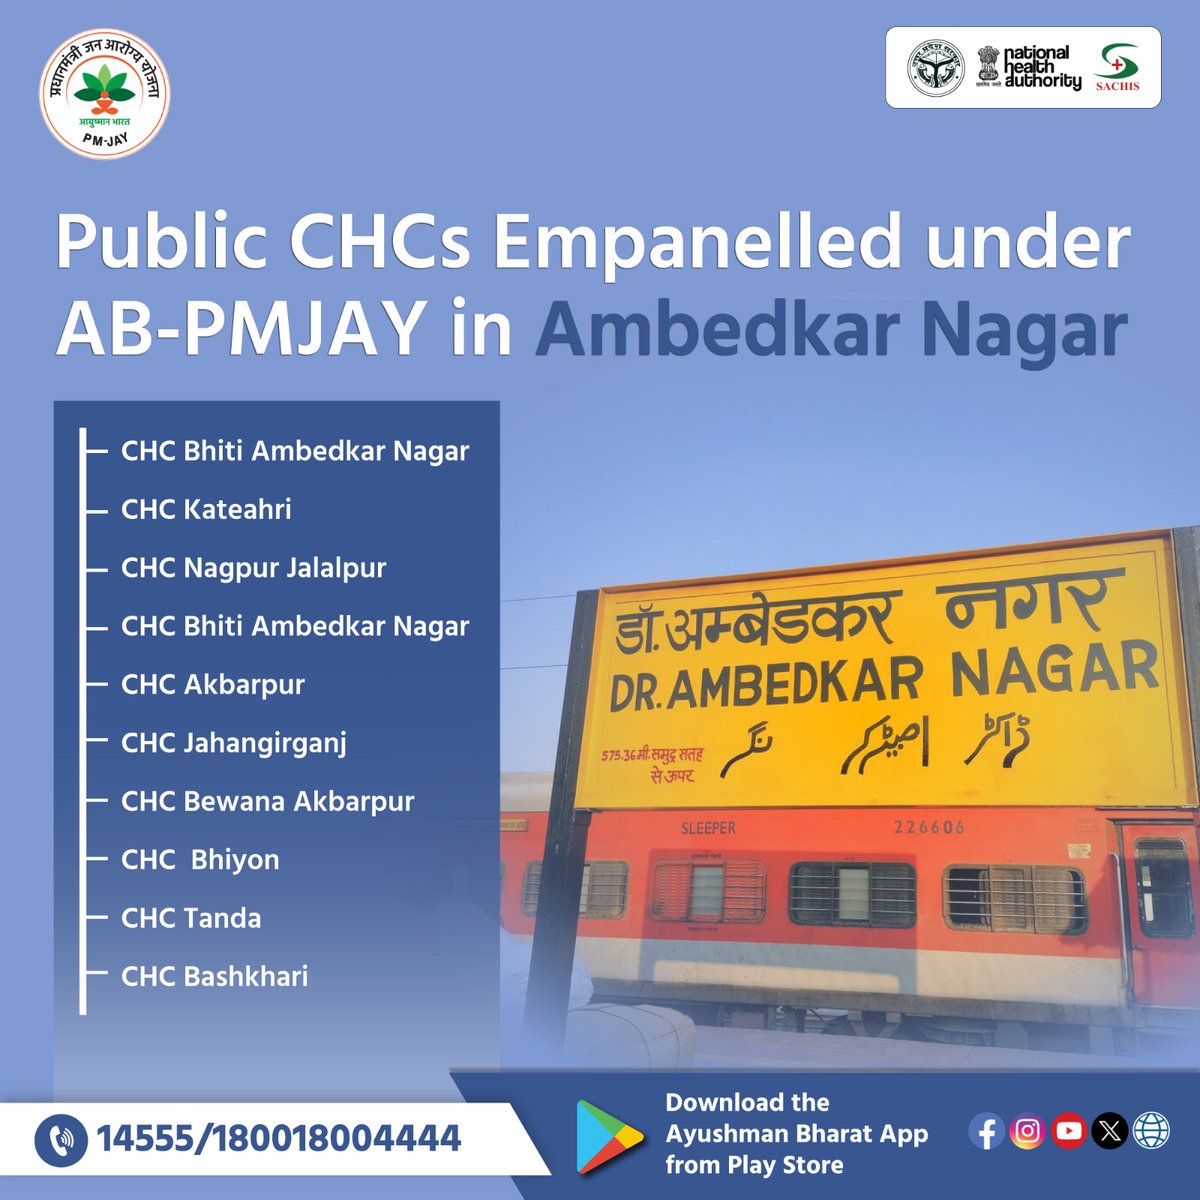 Obtain your #AyushmanCard from the nearest Community Health Centre (CHC) if you require treatment under #PMJAY while in #ambedkarnagar. Below is a list of CHCs available in Ambedkar Nagar.

#ayushmanbharatscheme #Ayushmanapp #UttarPradesh #HealthAndWellness #publichospital